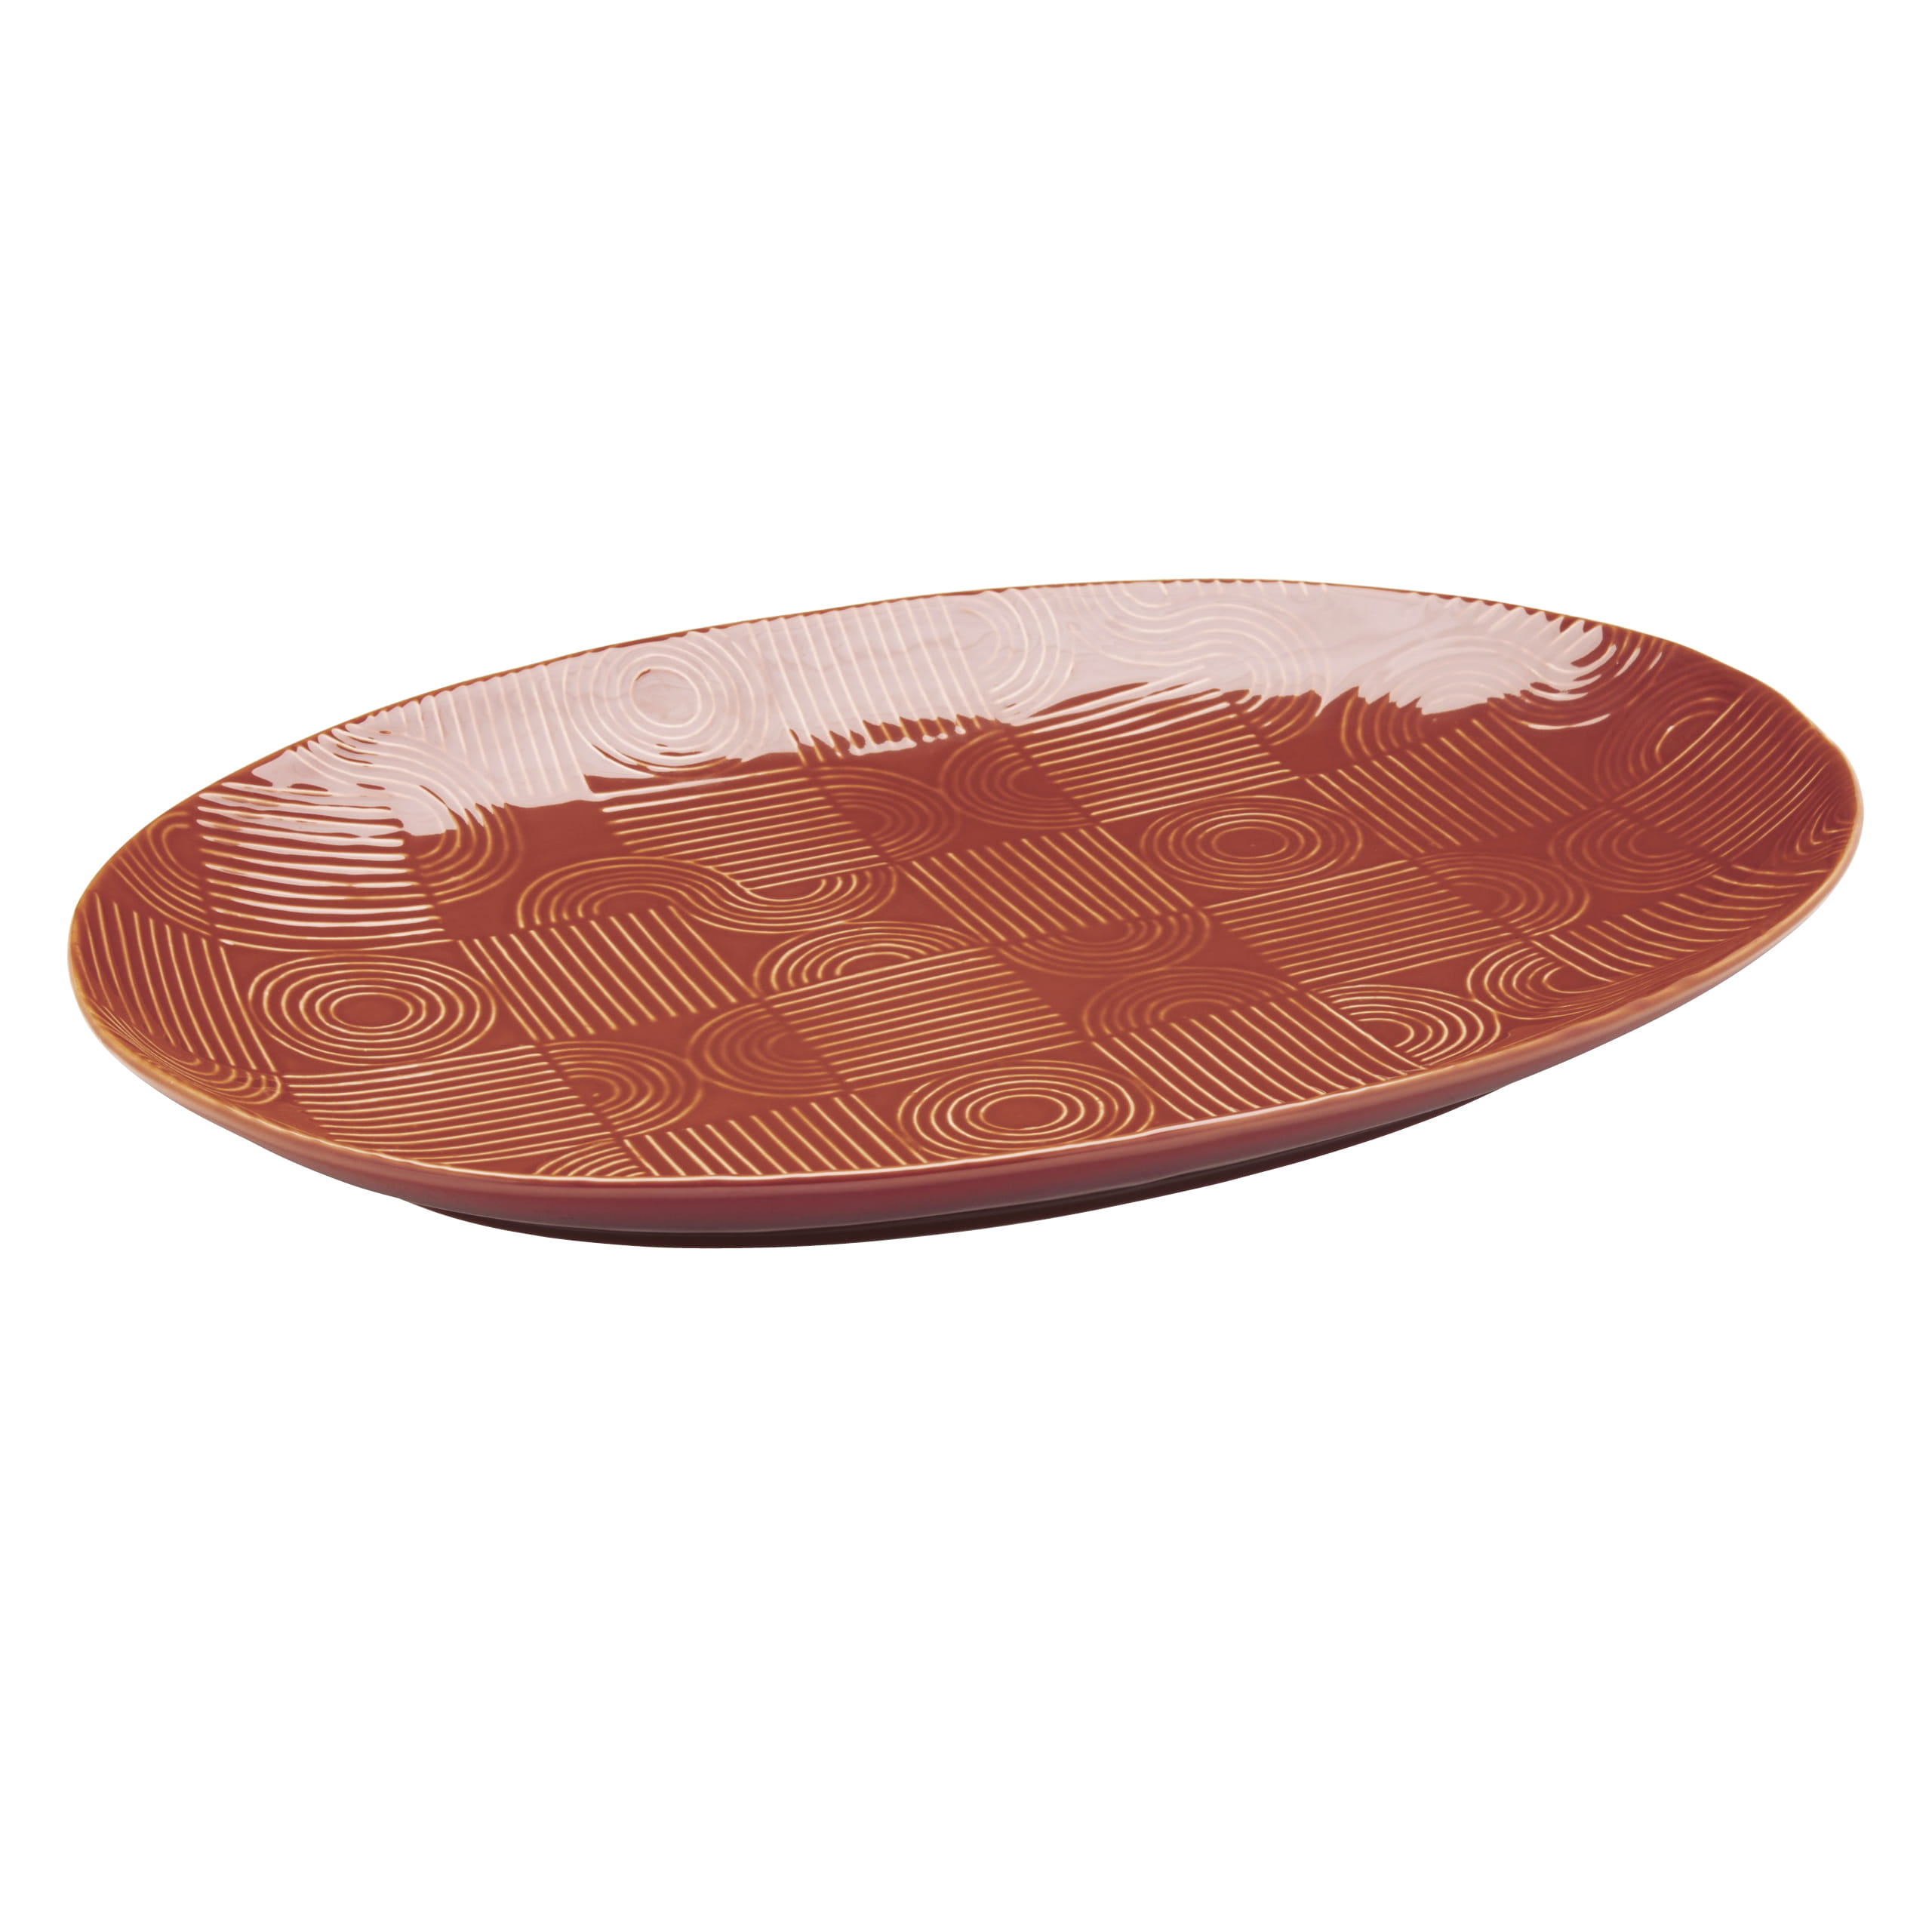 ARC Platte oval, 36 x 27 cm, Terracotta, Keramik, in Geschenkbox